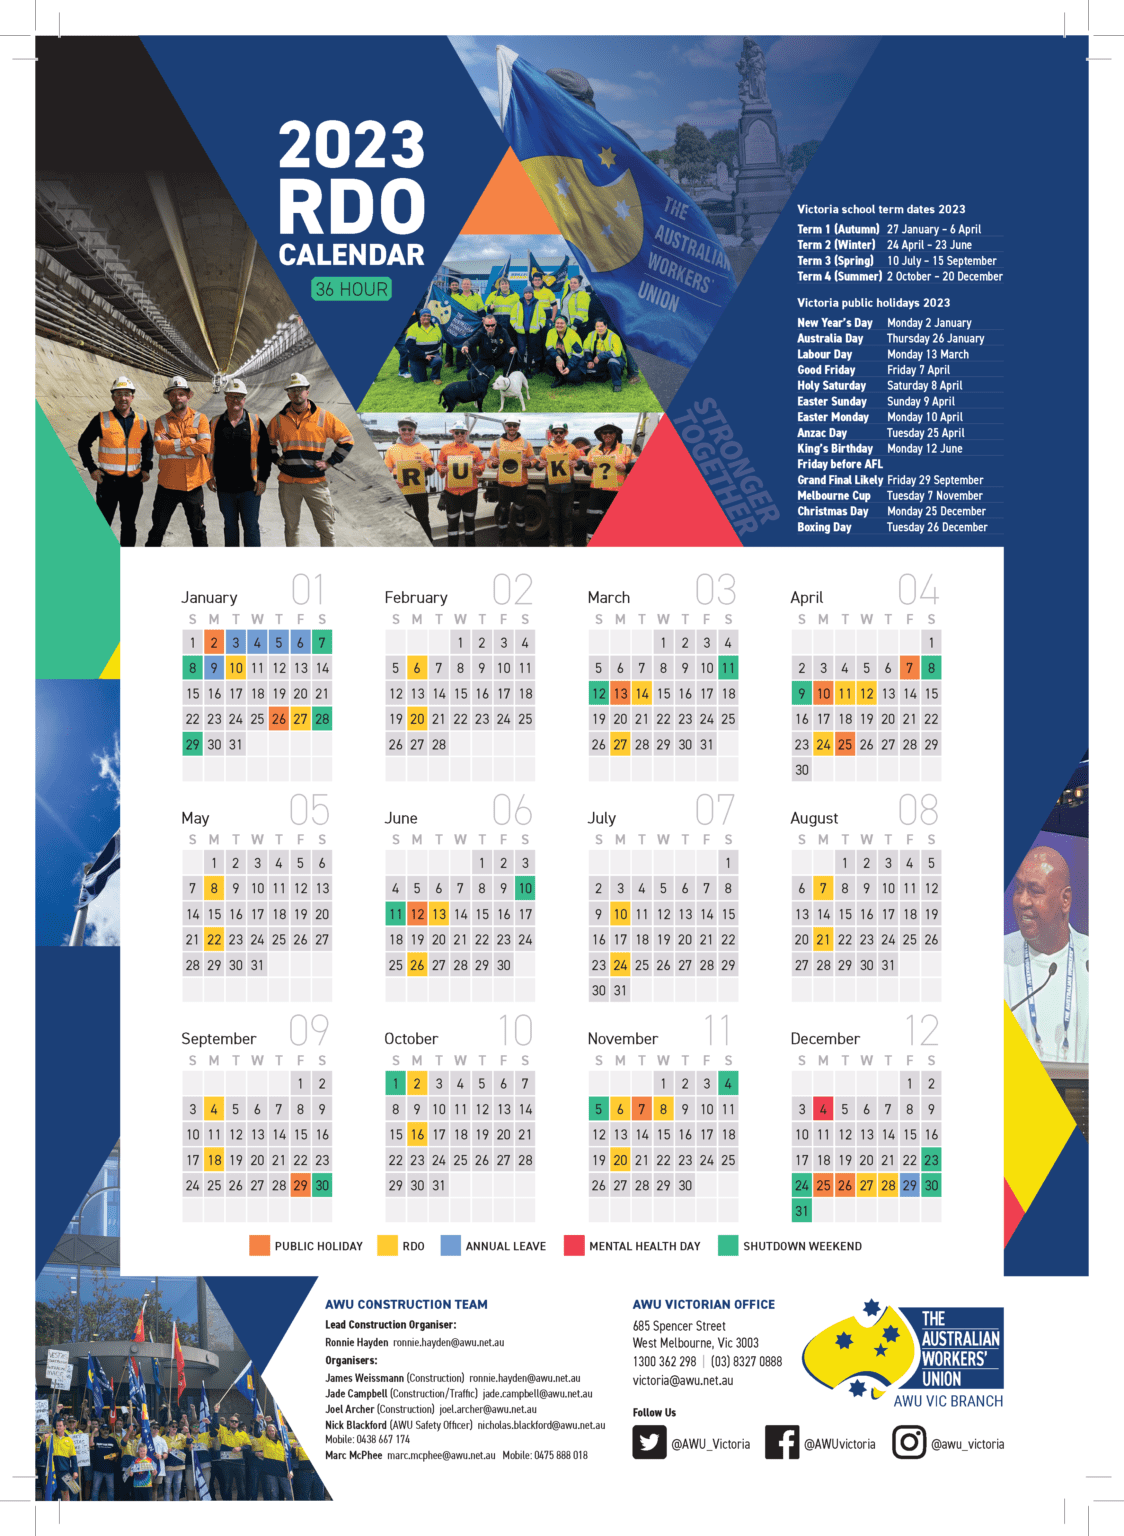 AWU VICTORIA RDO Calendars 2023 The Australian Workers' Union The Australian Workers' Union